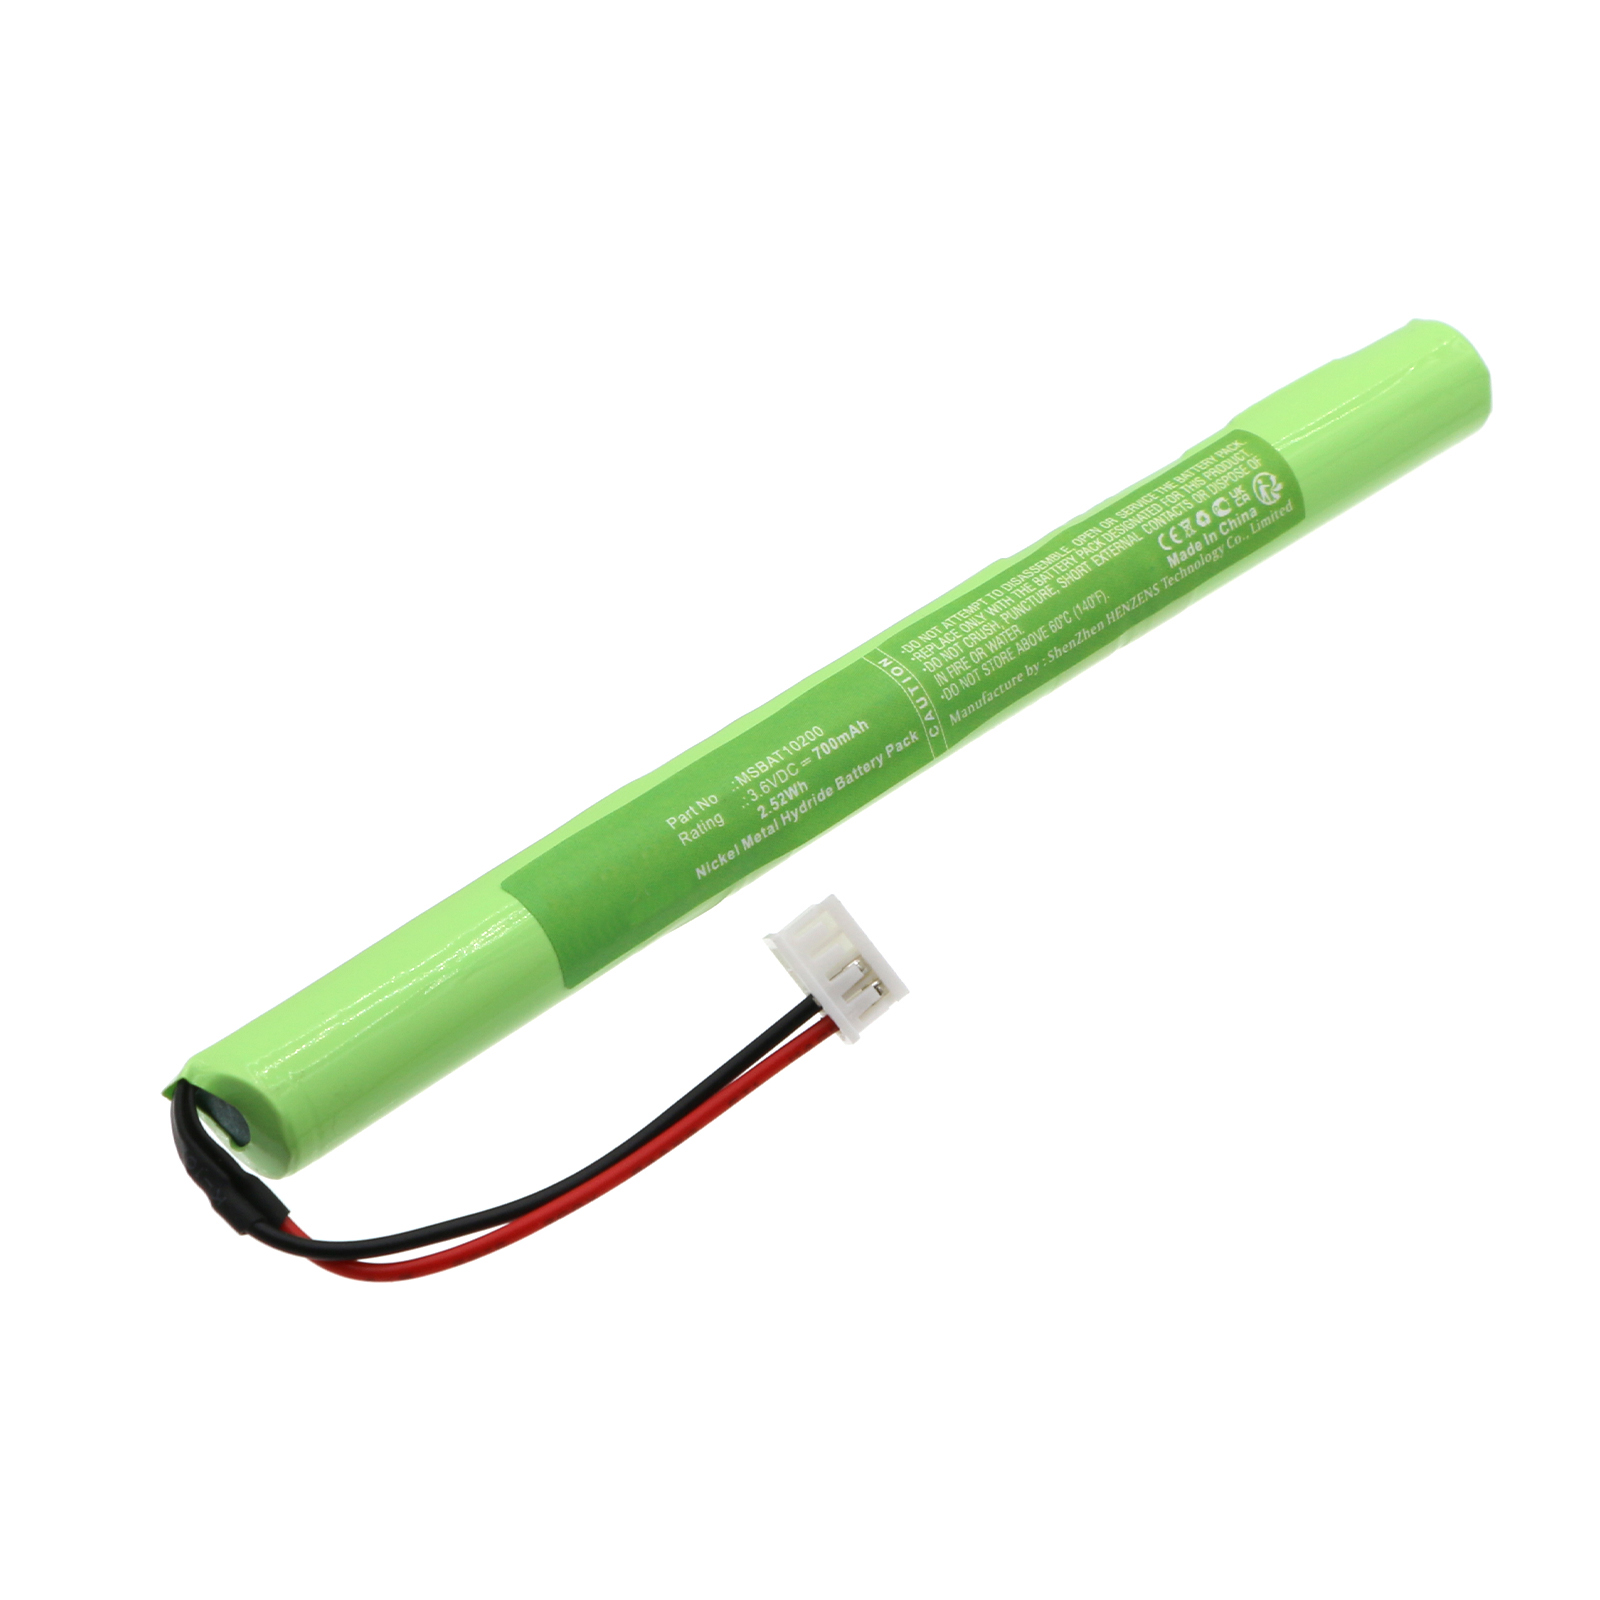 Synergy Digital PLC Battery, Compatible with Johnson Controls MS-BAT1020-0 PLC Battery (Ni-MH, 3.6V, 700mAh)